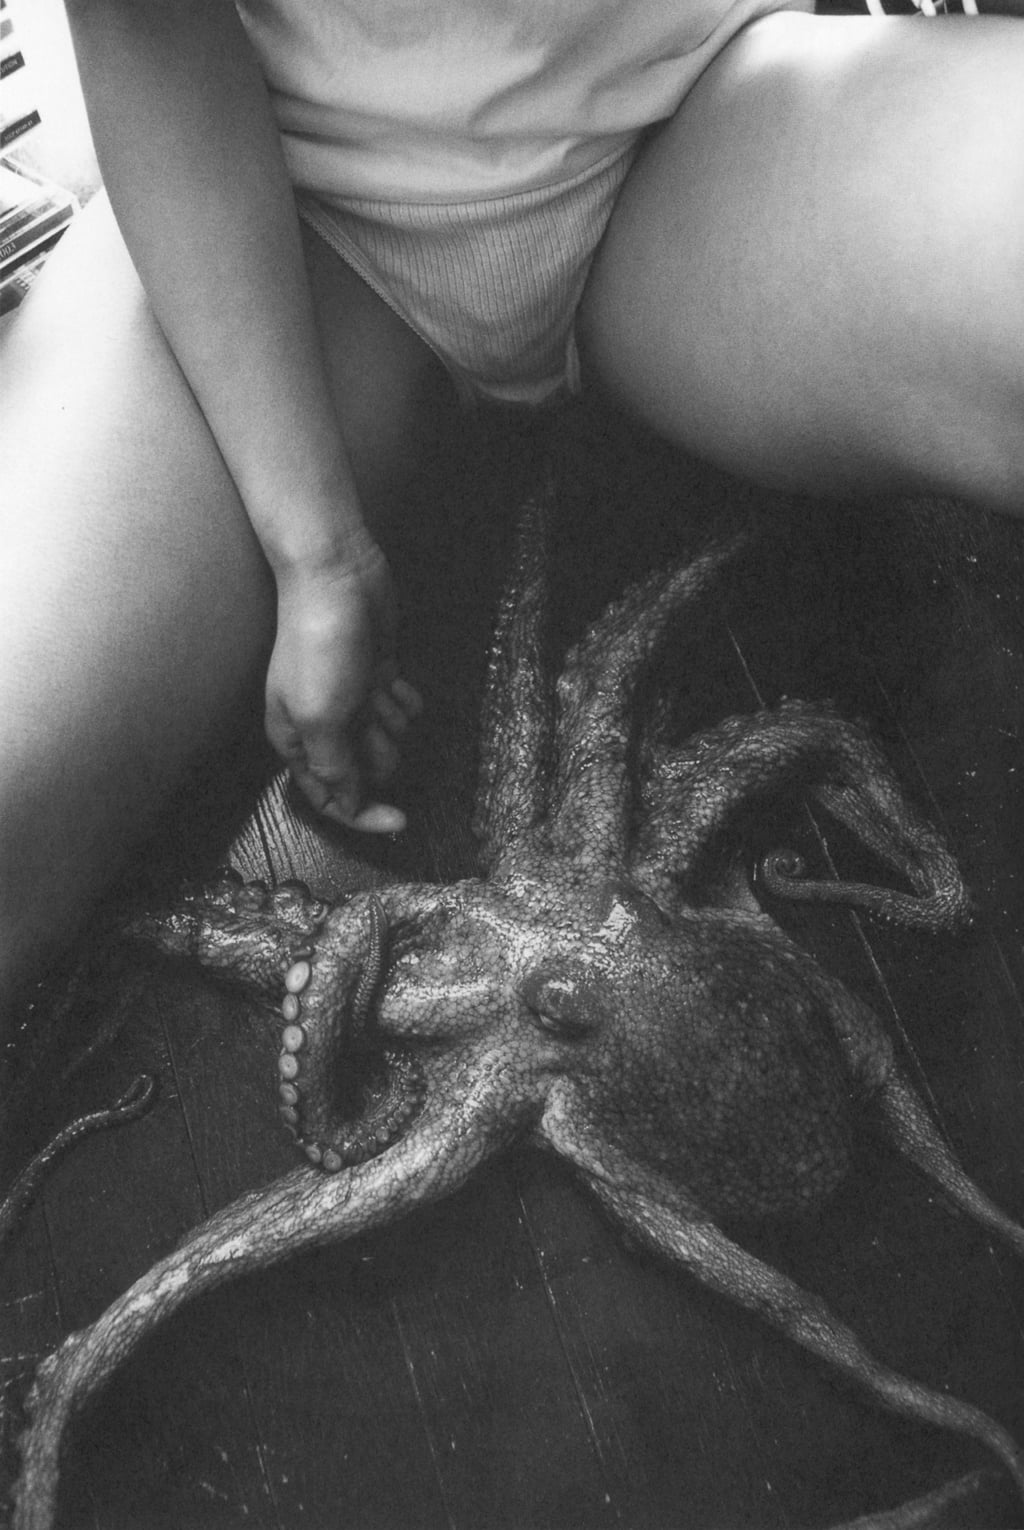 Vintage Japan Octopus Porn - The Sensuality Between a Woman and an Octopus: a Modern Take / Pen ãƒšãƒ³